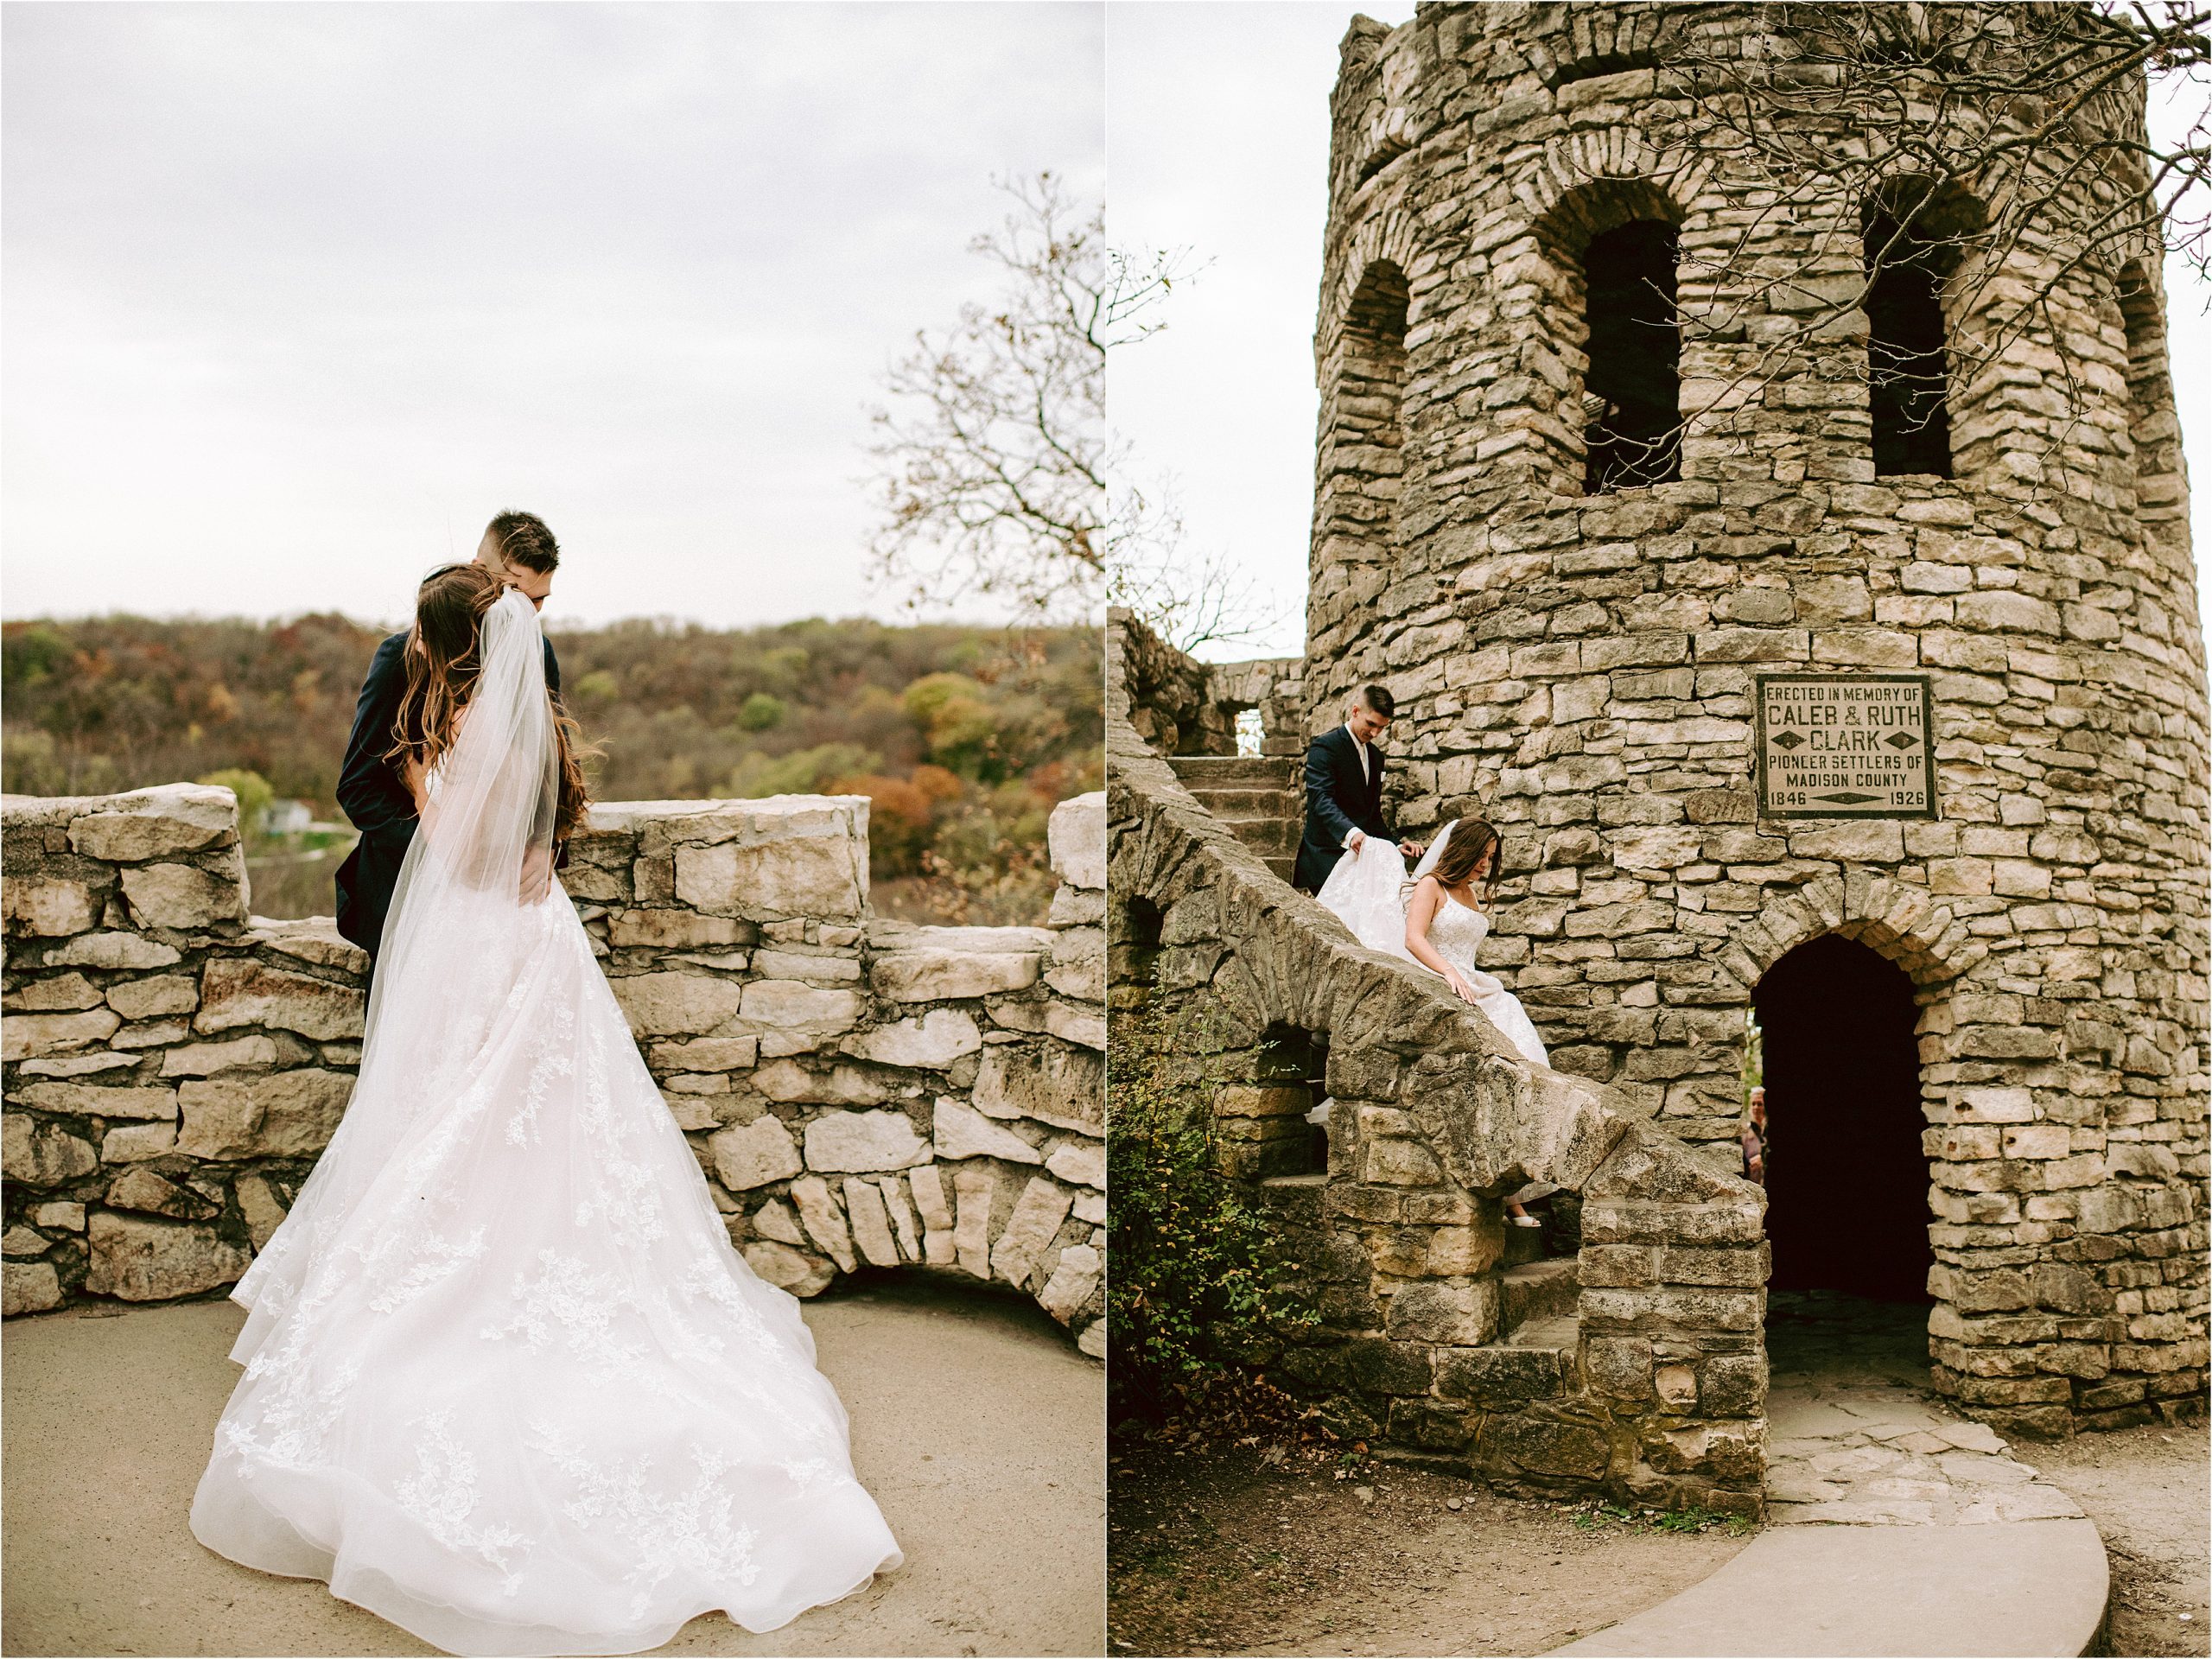 Clark Tower Winterset Iowa Wedding Photos